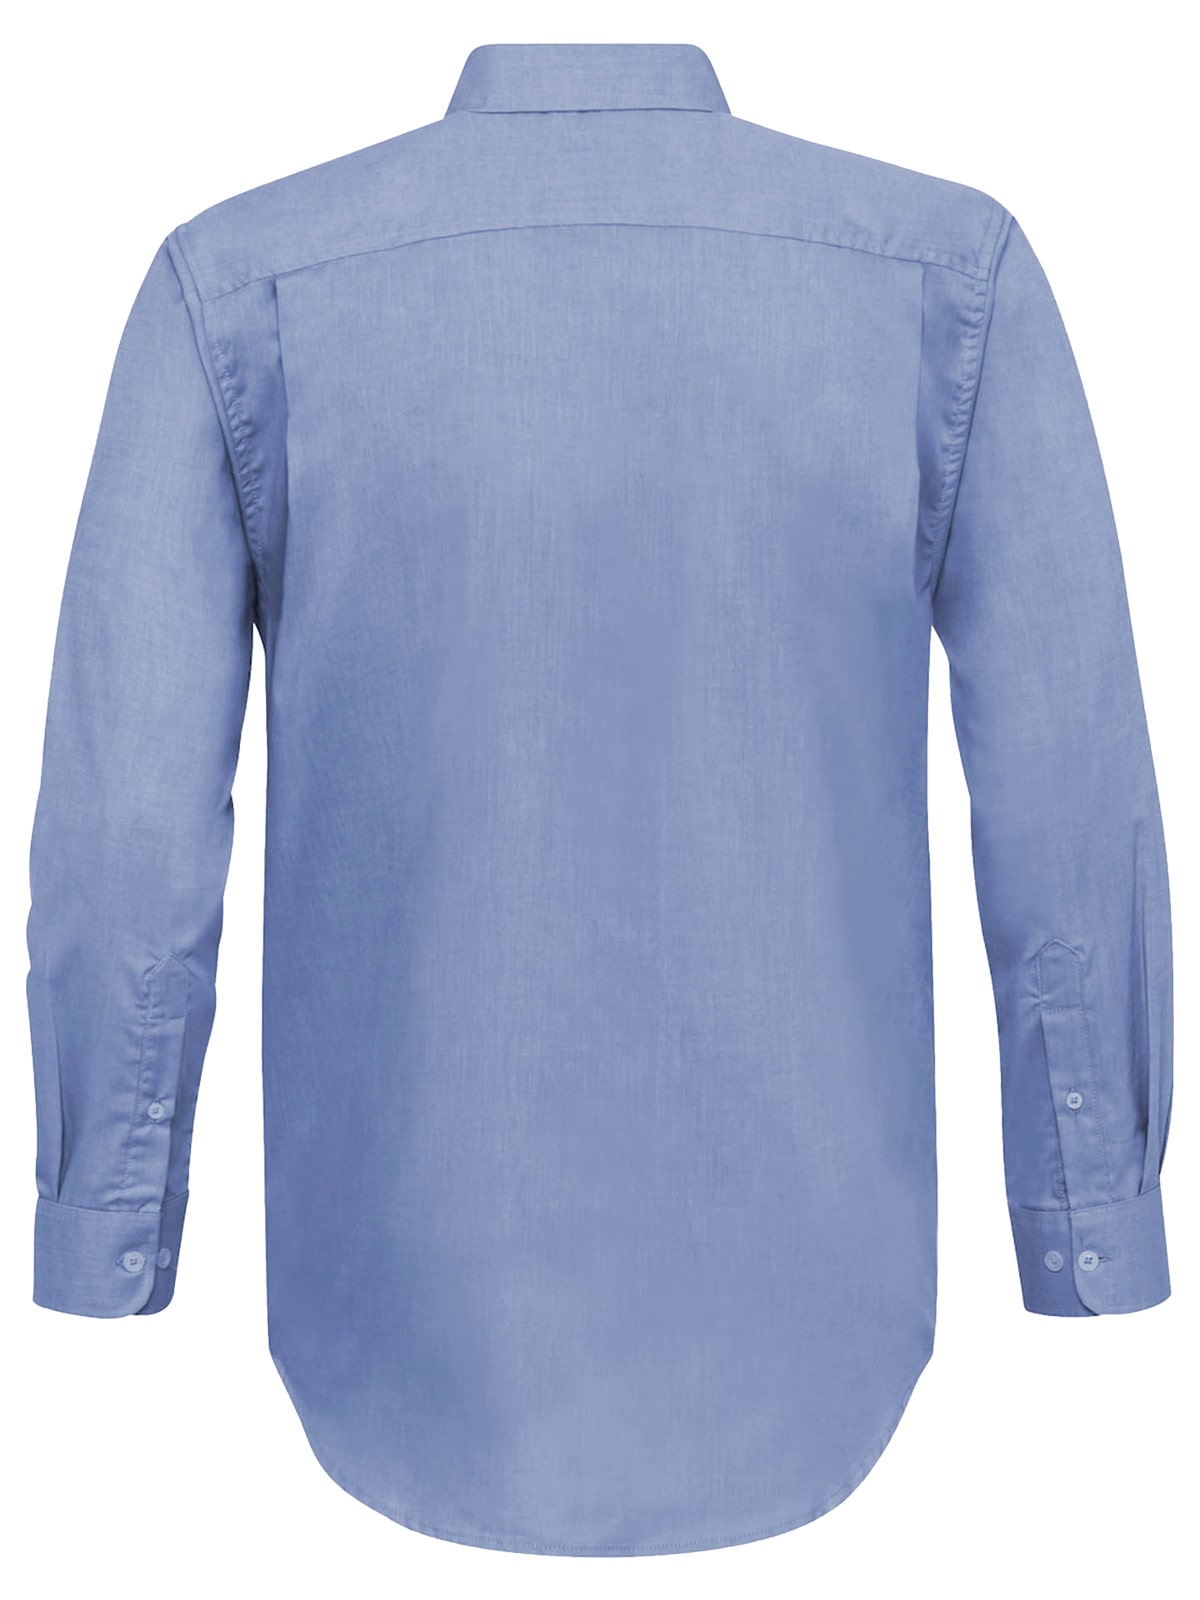 Sky blue oxford shirts